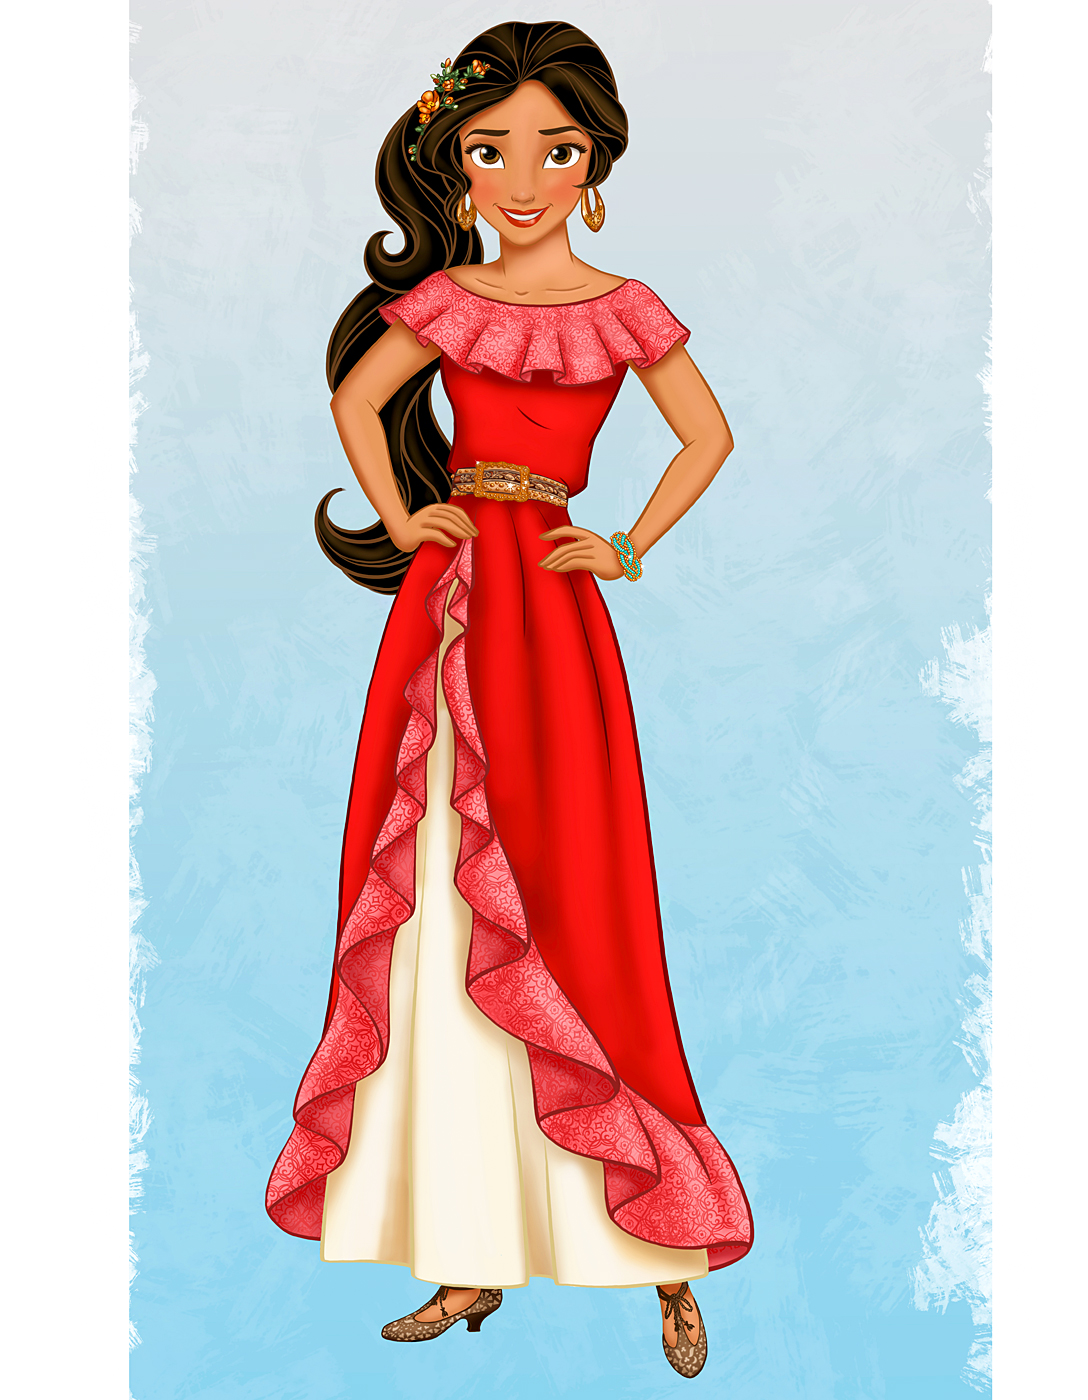 disney princesses with red dresses - Google Search | Princesa aurora,  Princesas, Vestidos rojos